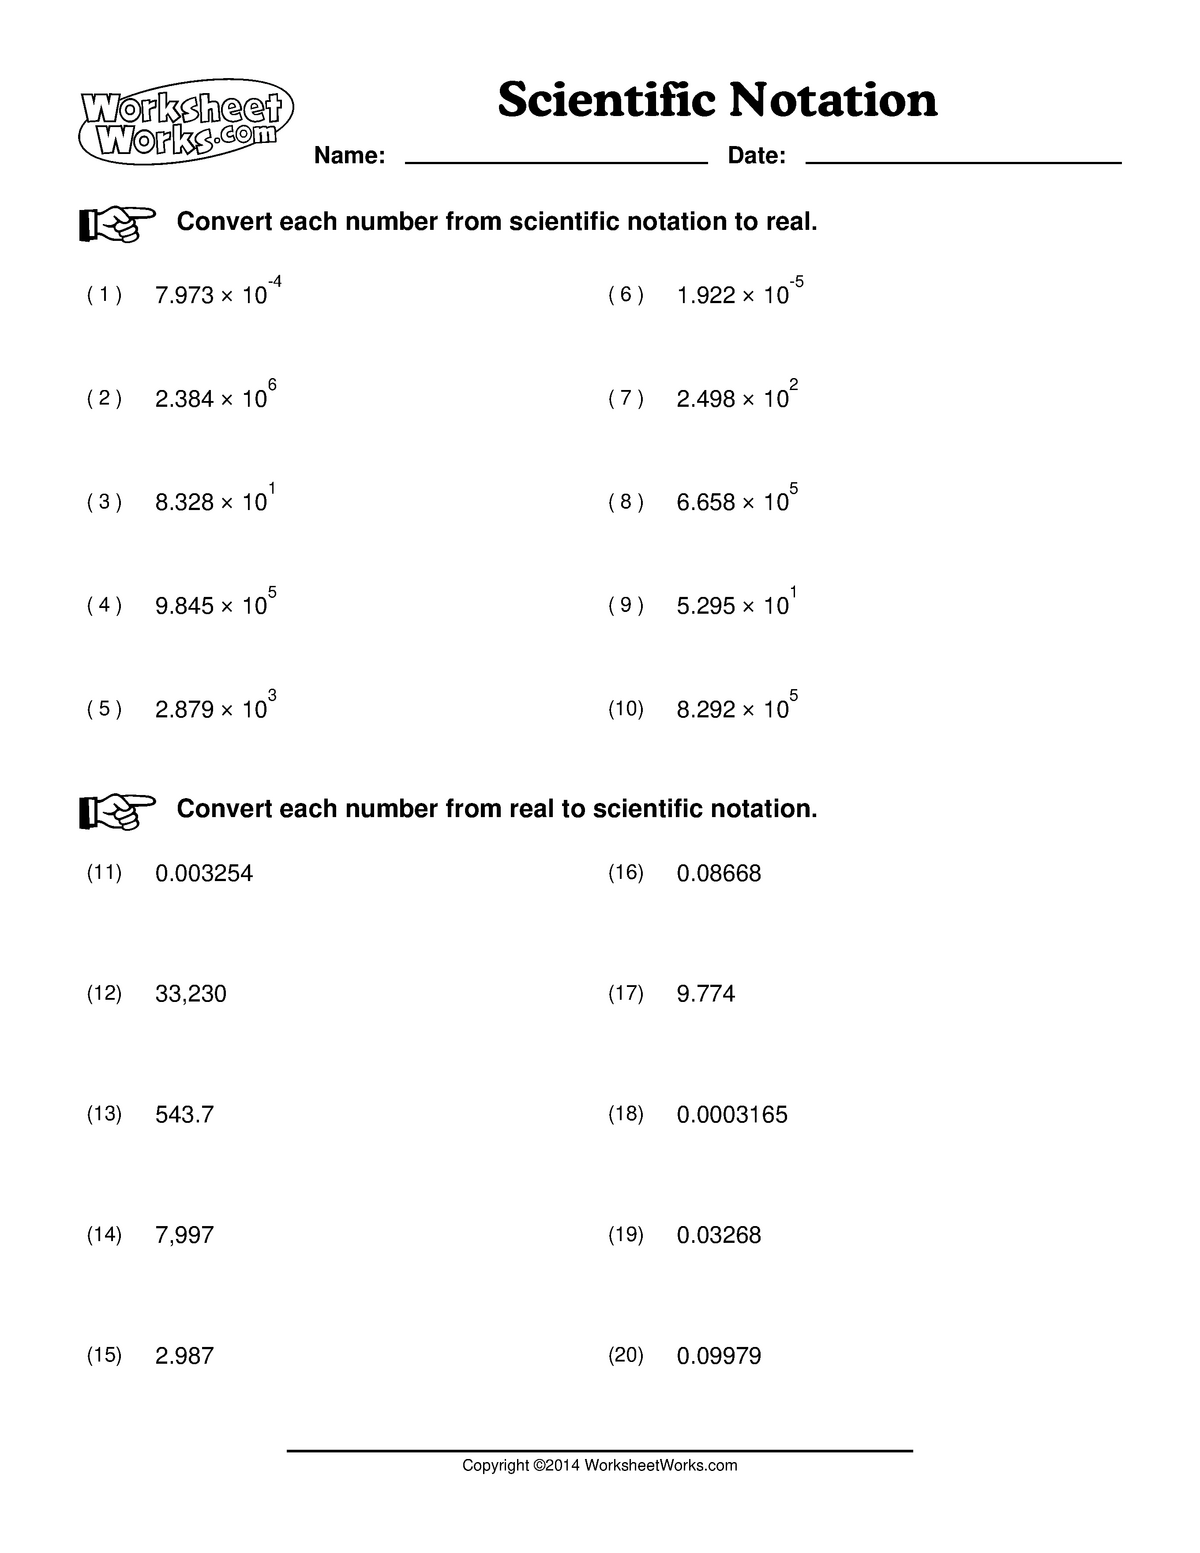 Scientific Notation Practice Problems - CHEM-CH20 - Chemistry With Scientific Notation Worksheet Answer Key